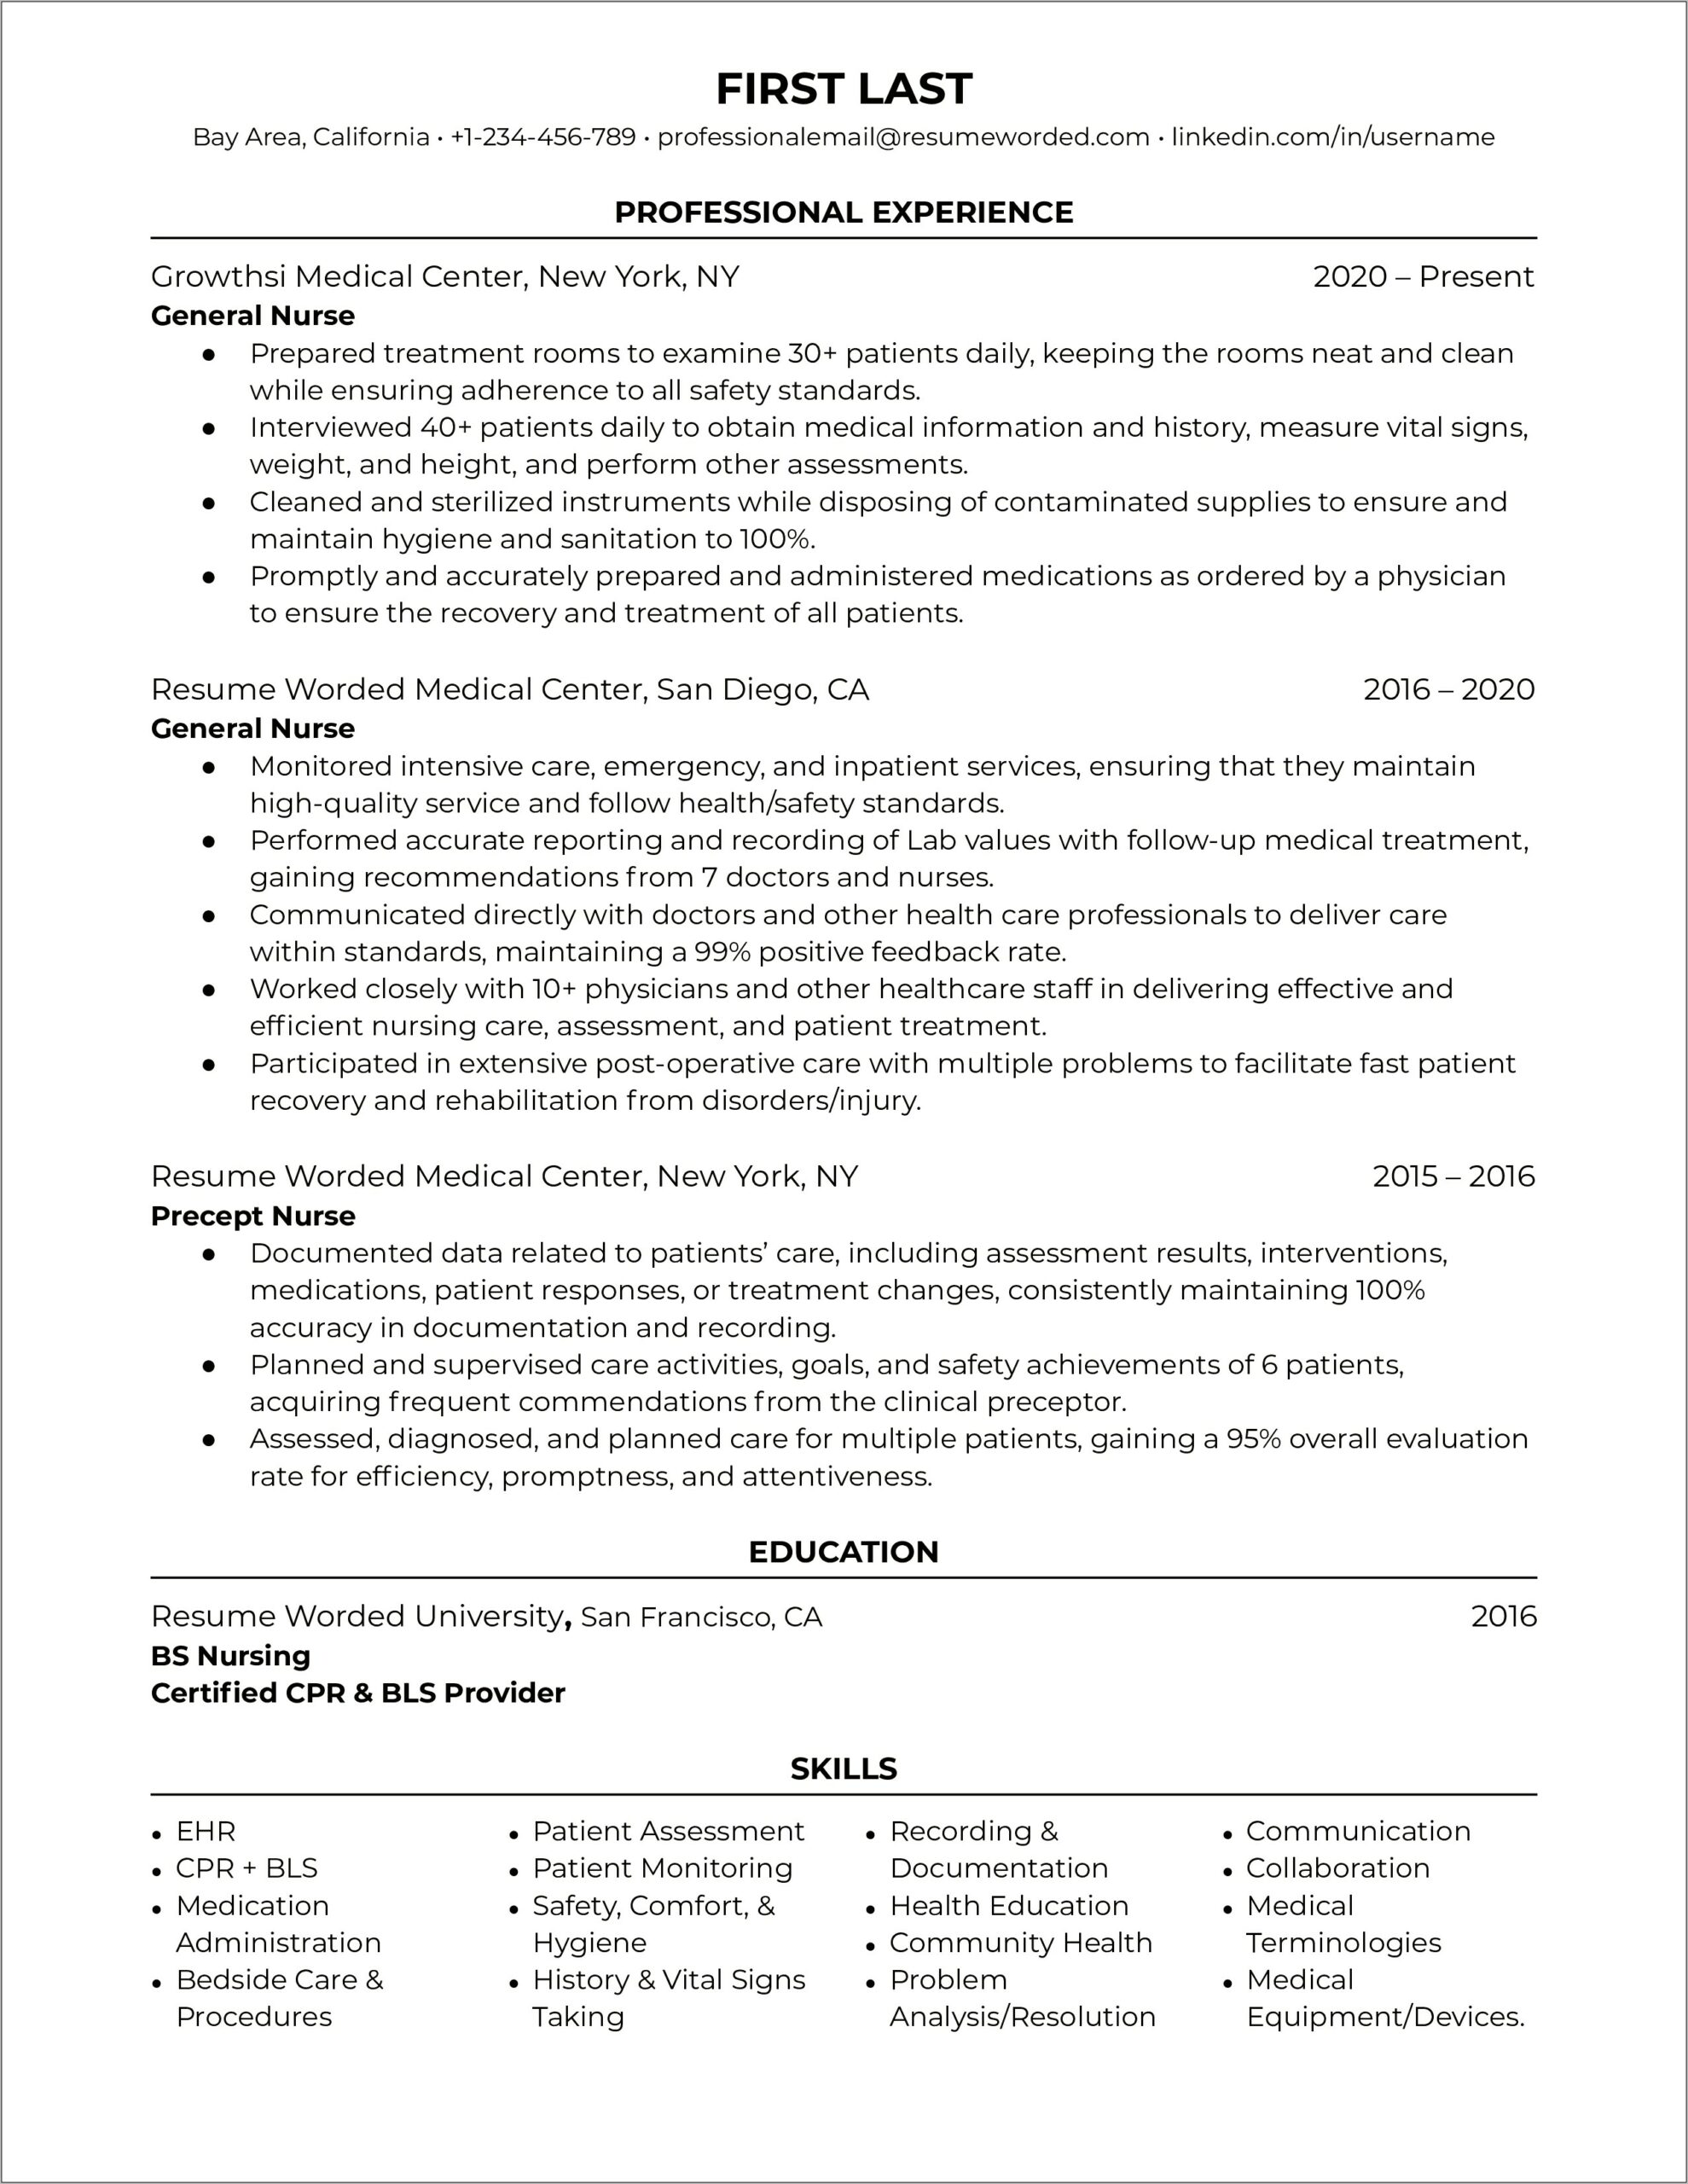 Resume Skills As A Critical Care Nurse